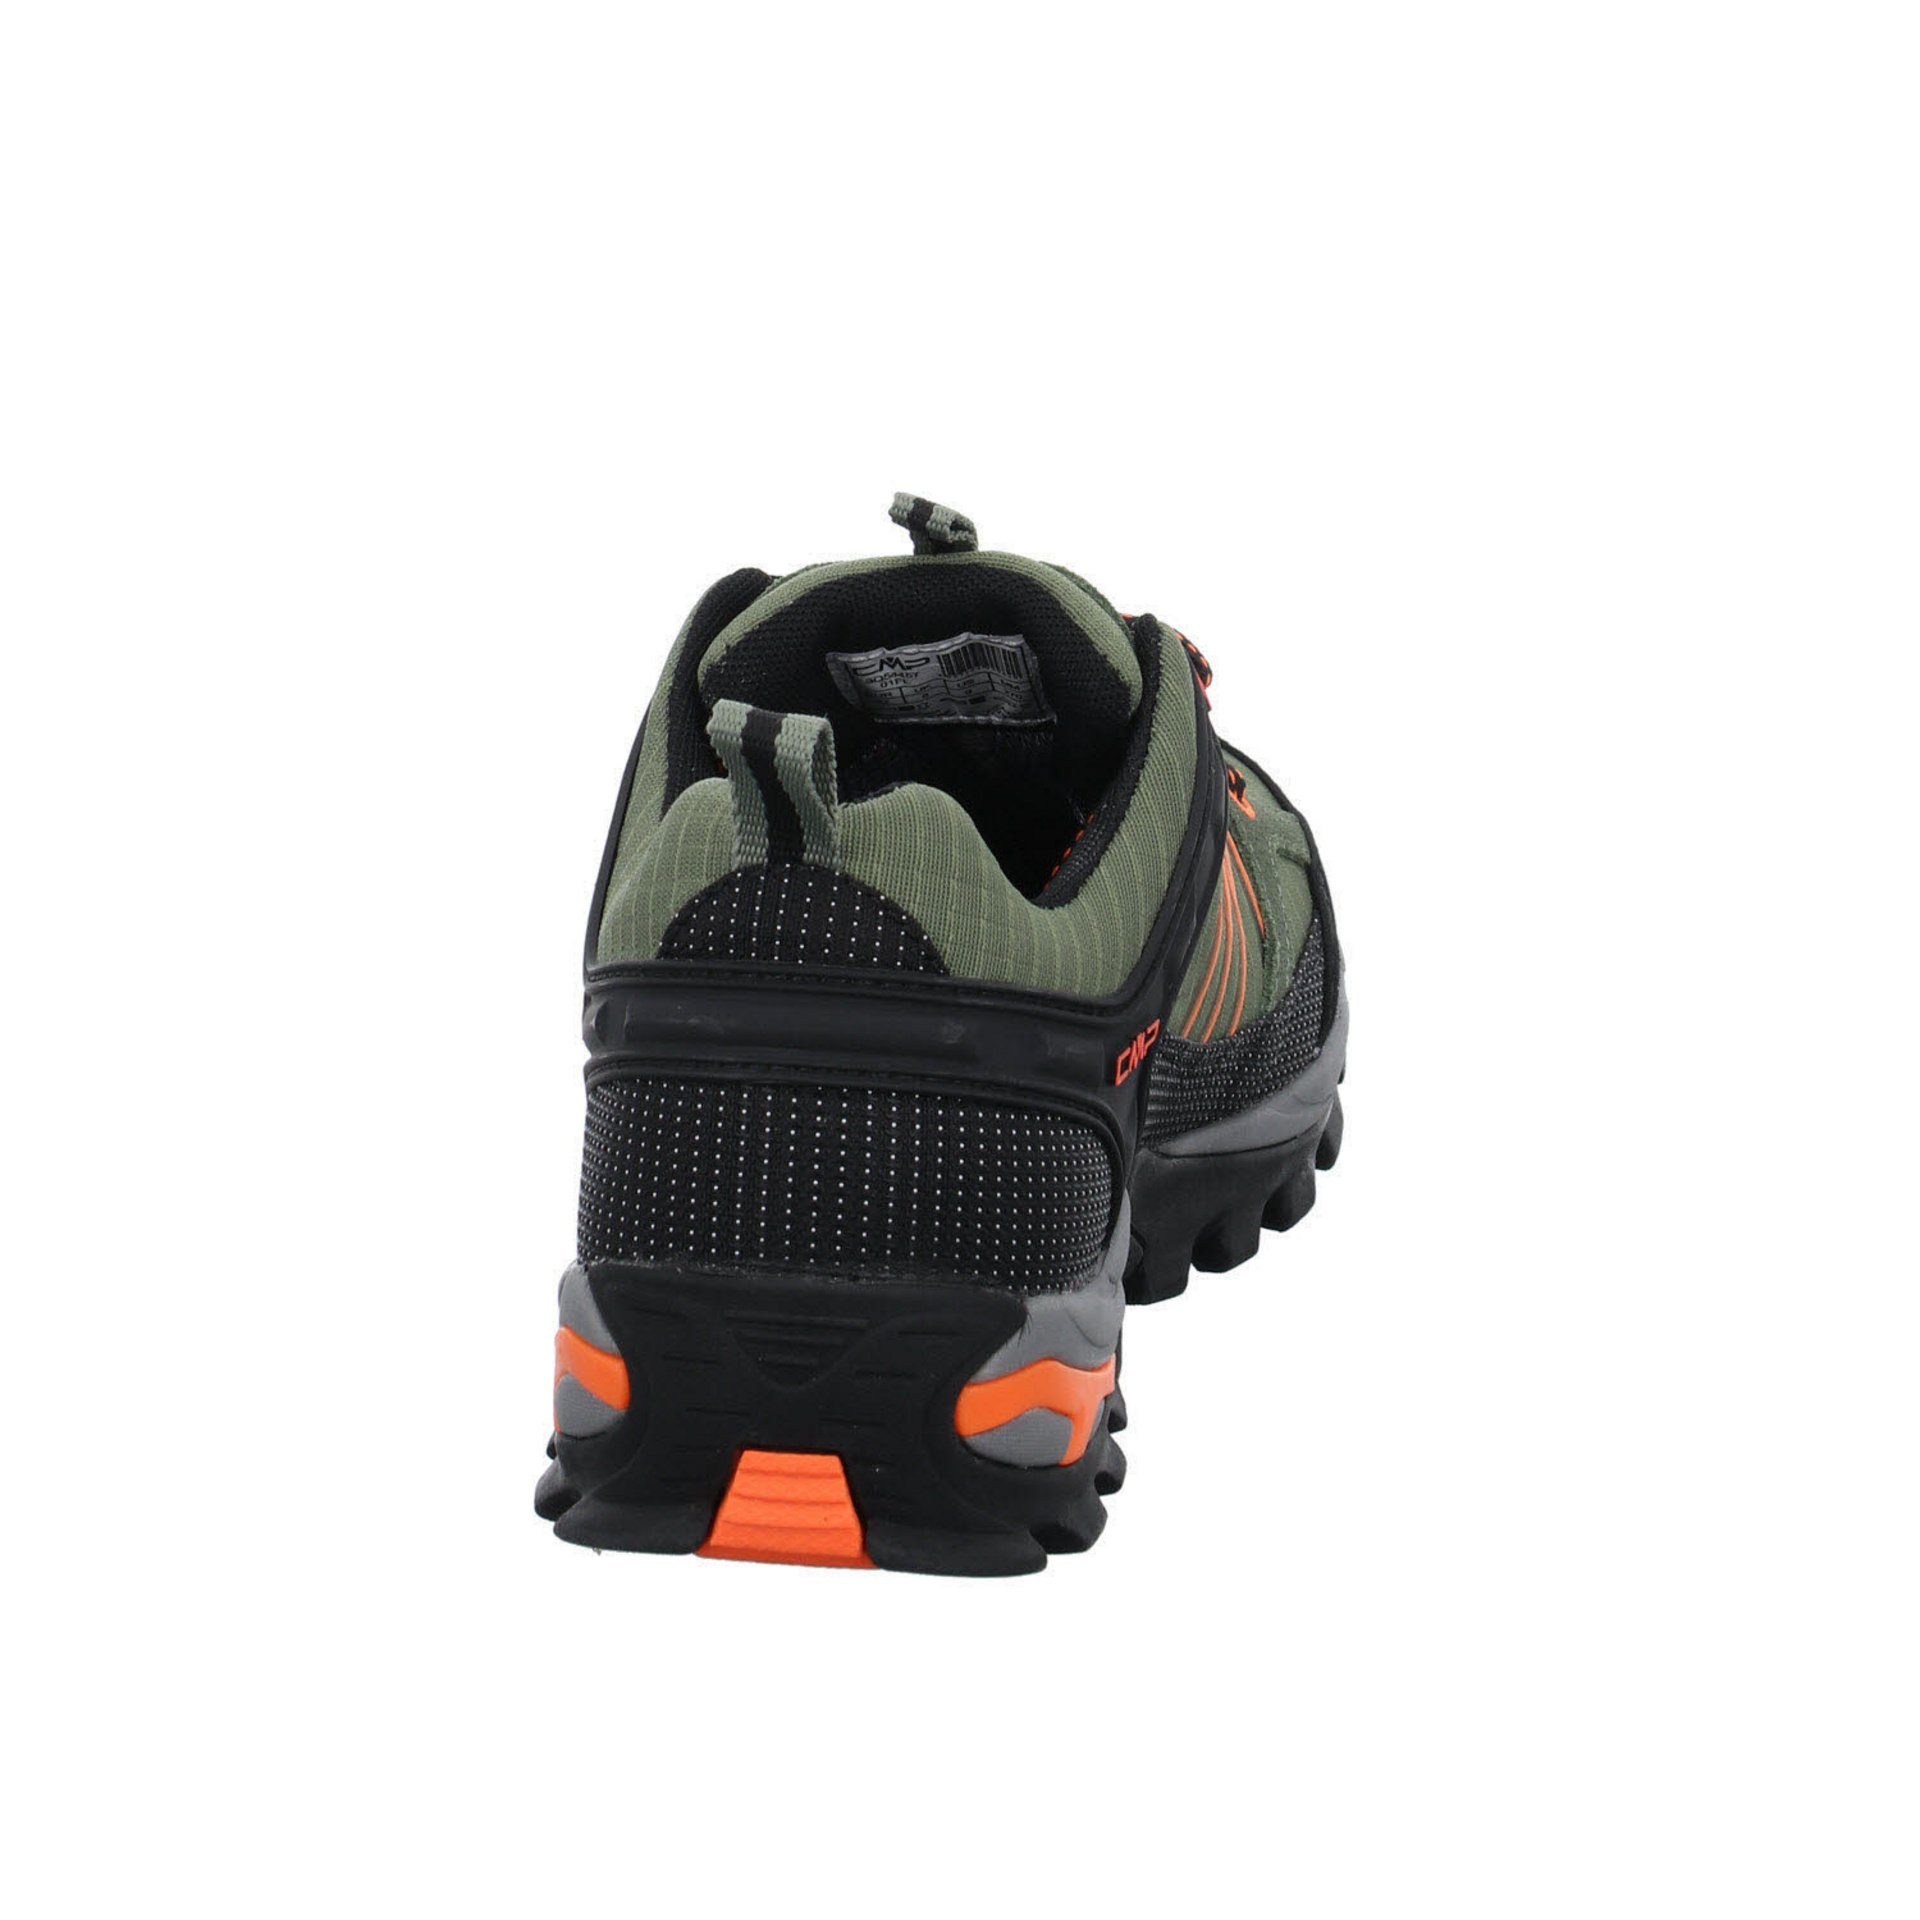 (03201907) Outdoorschuh Outdoor Herren Rigel Low TORBA-FLASH Outdoorschuh CMP Leder-/Textilkombination Schuhe